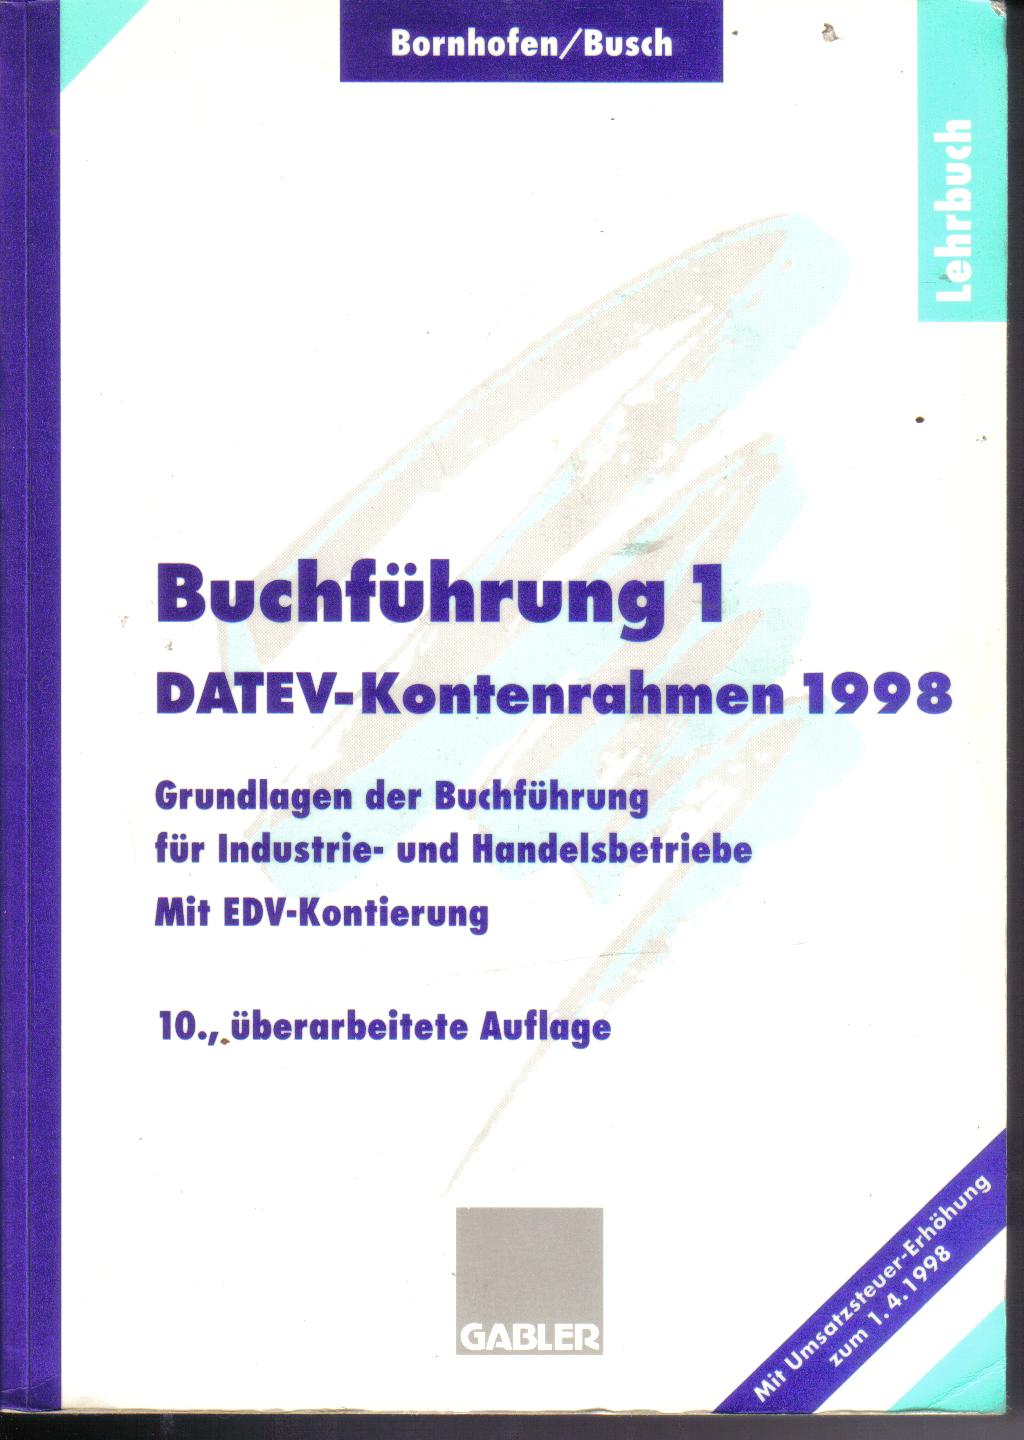 Bornhofen/BushBuchfuehrung 1 Datev-Kontenrahmen 1998